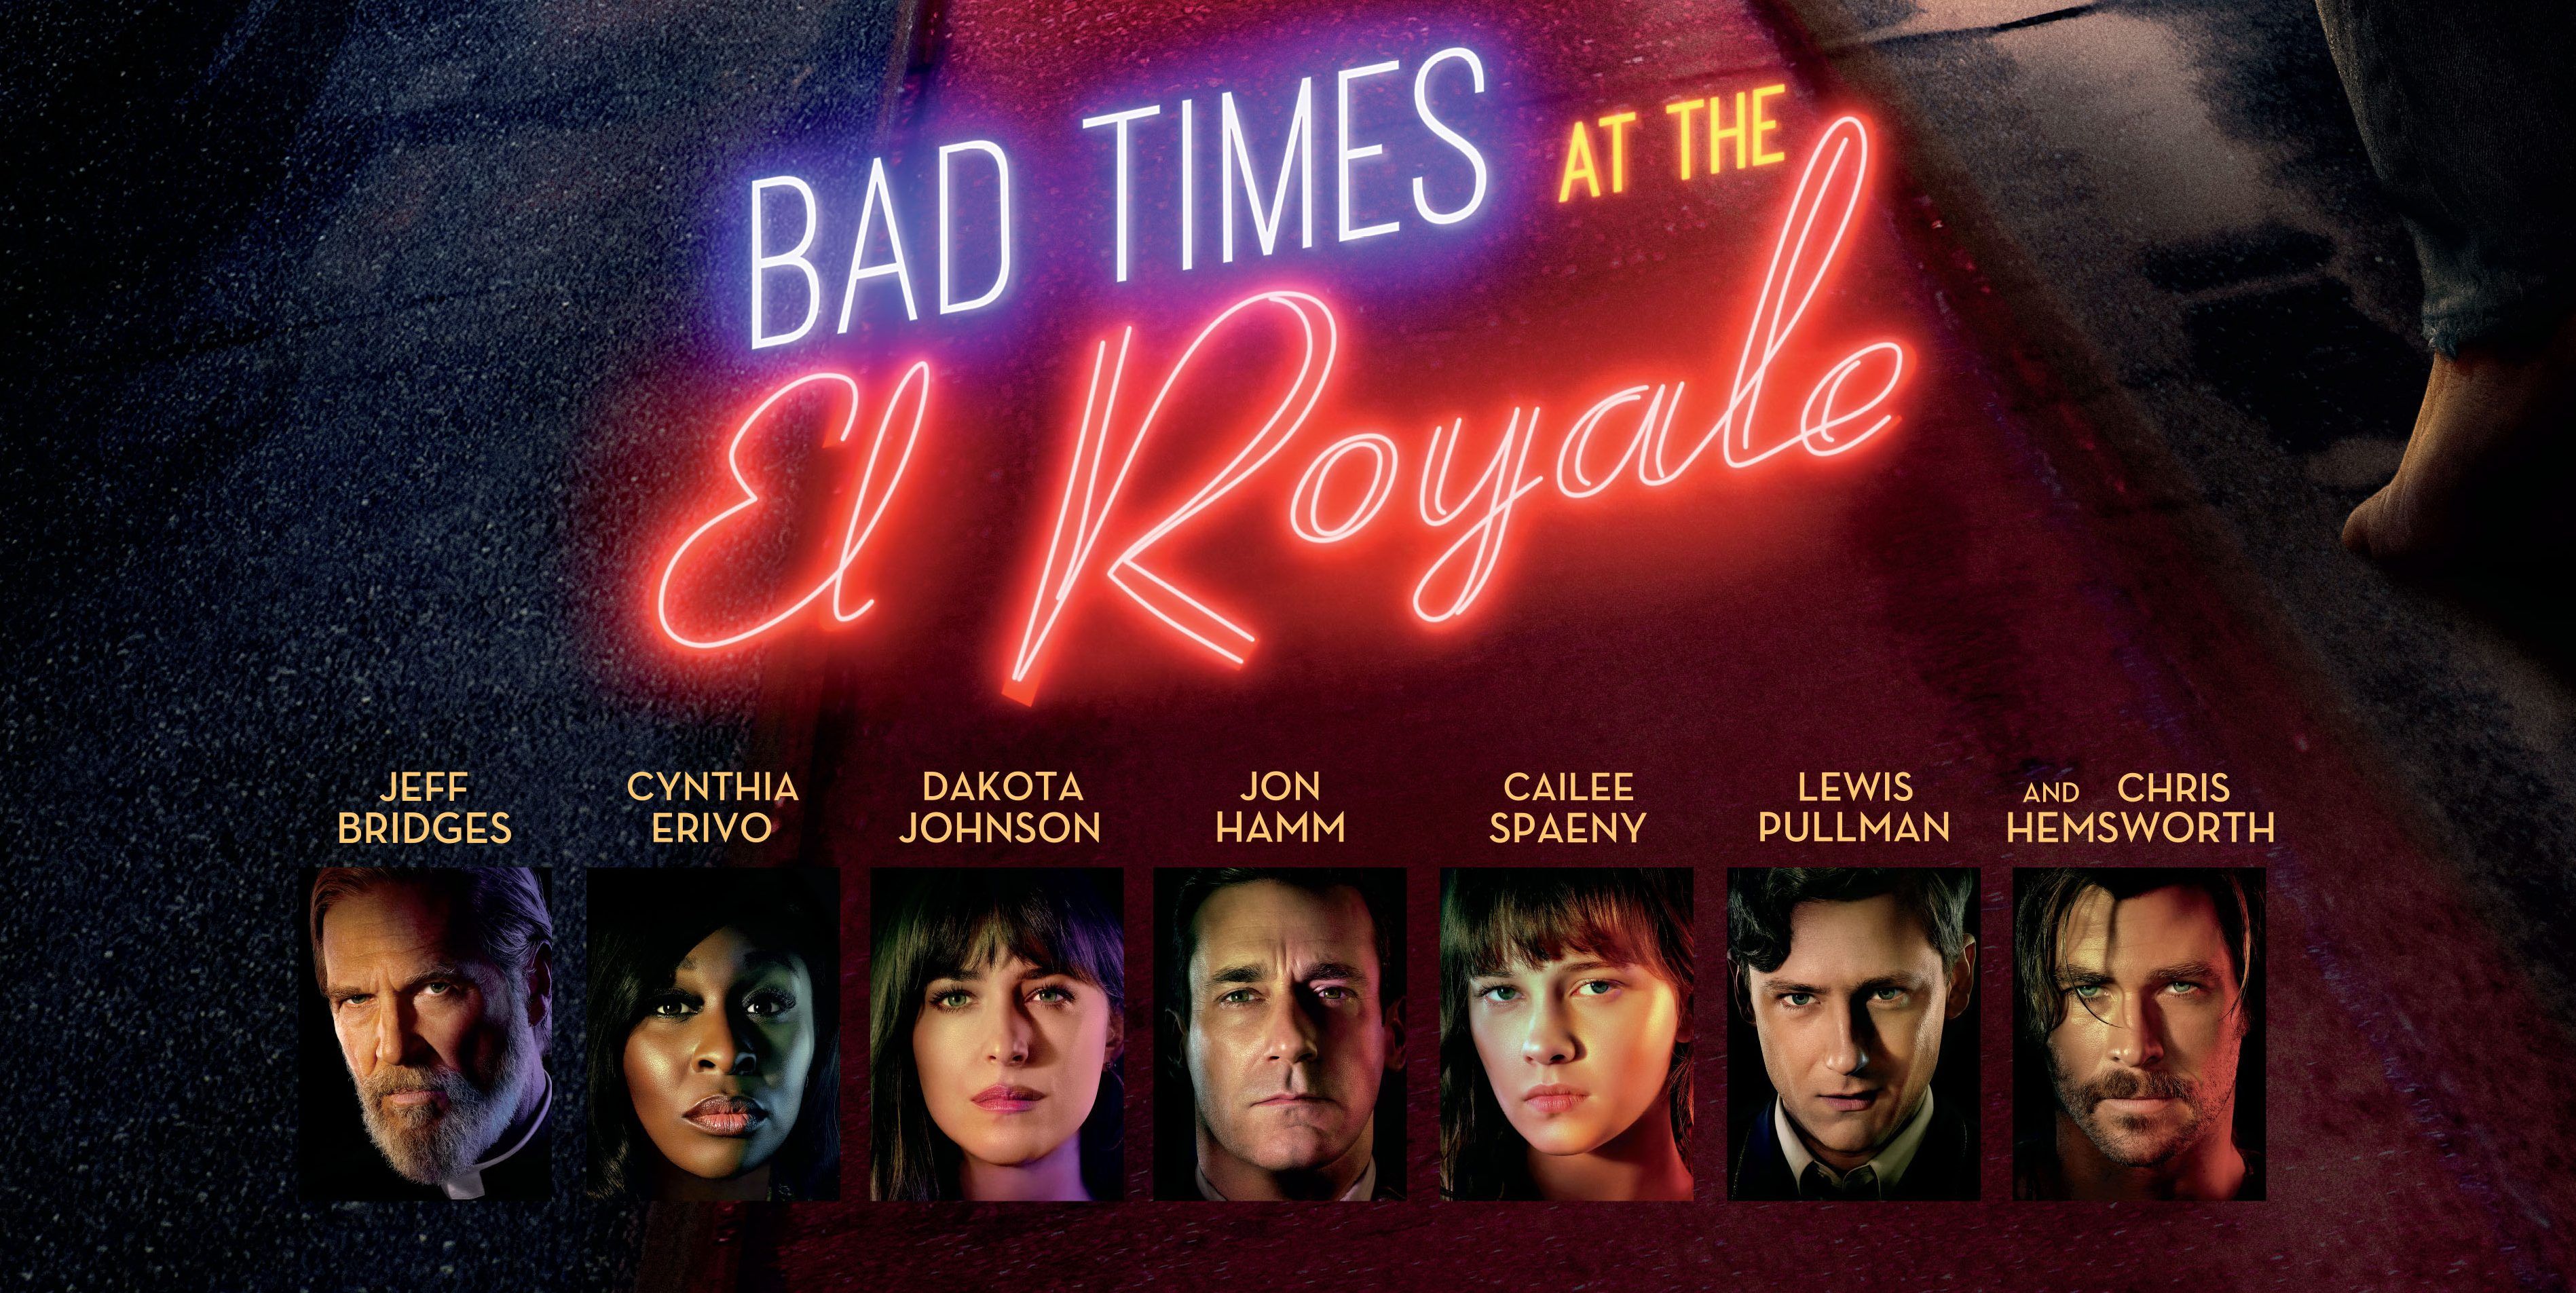 Chris Hemsworth Bad Times At The El Royale 2018 Wallpapers